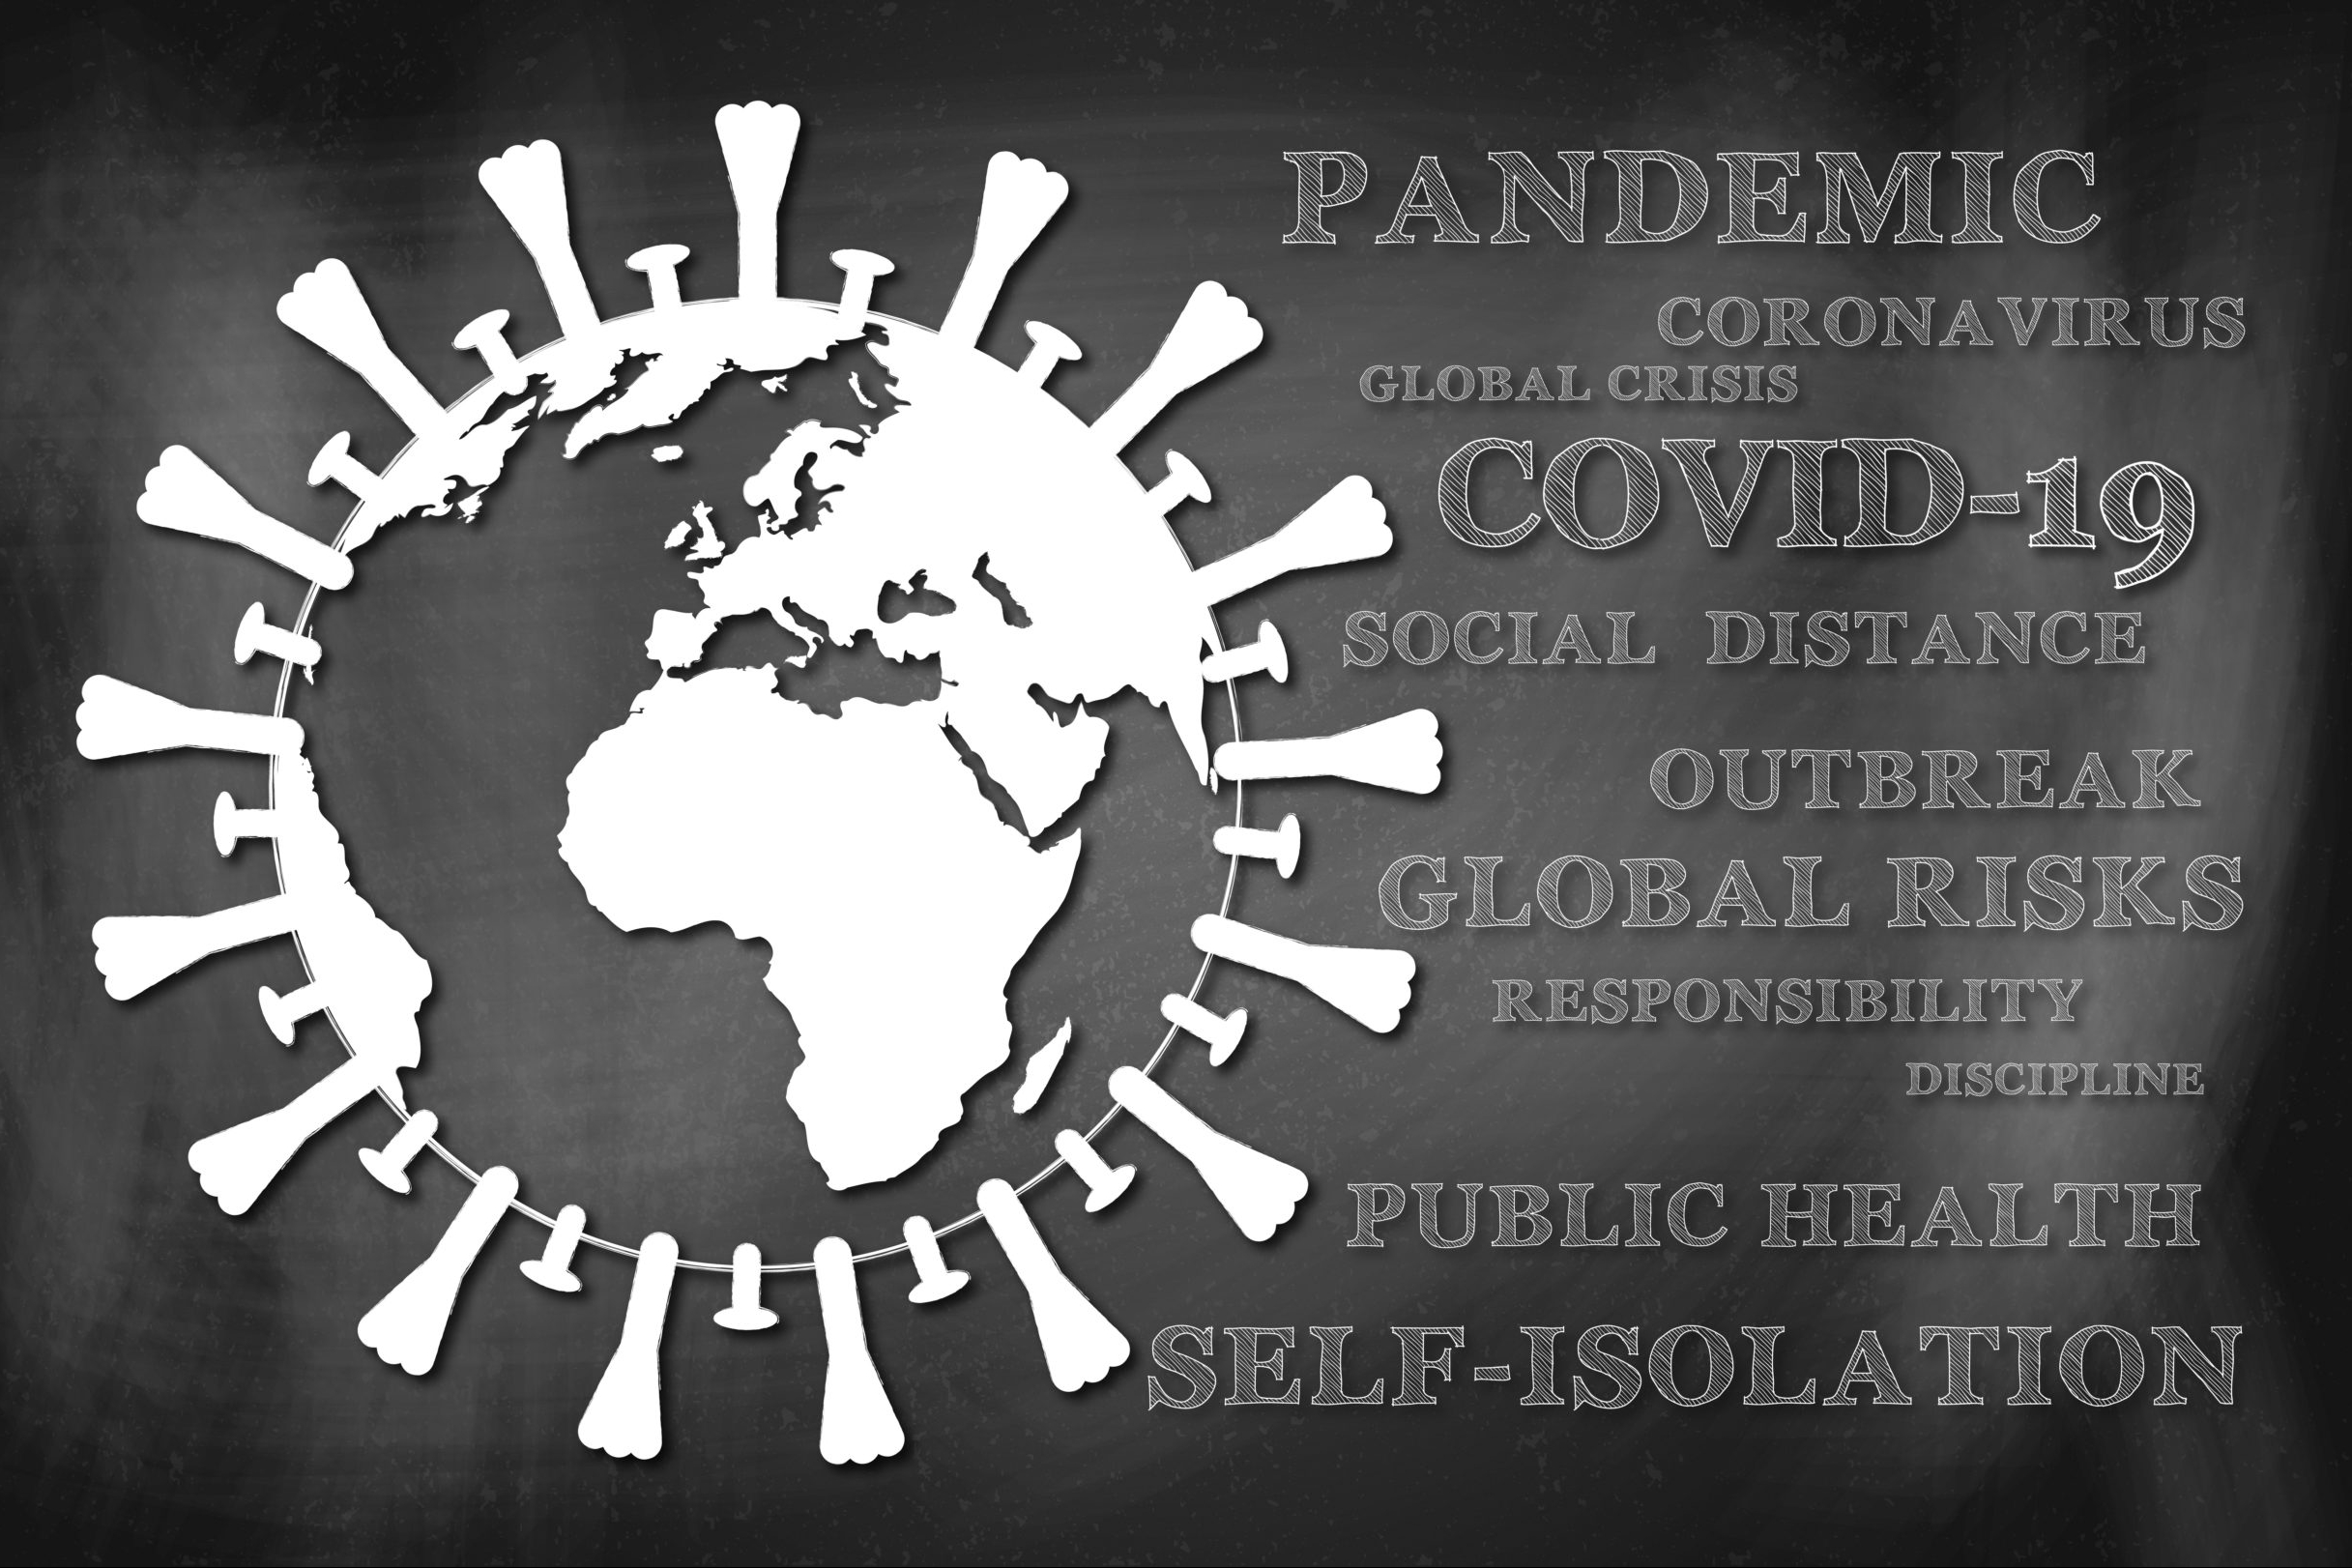 Globe shaped like Coronavirus with associated word cloud re pandemic